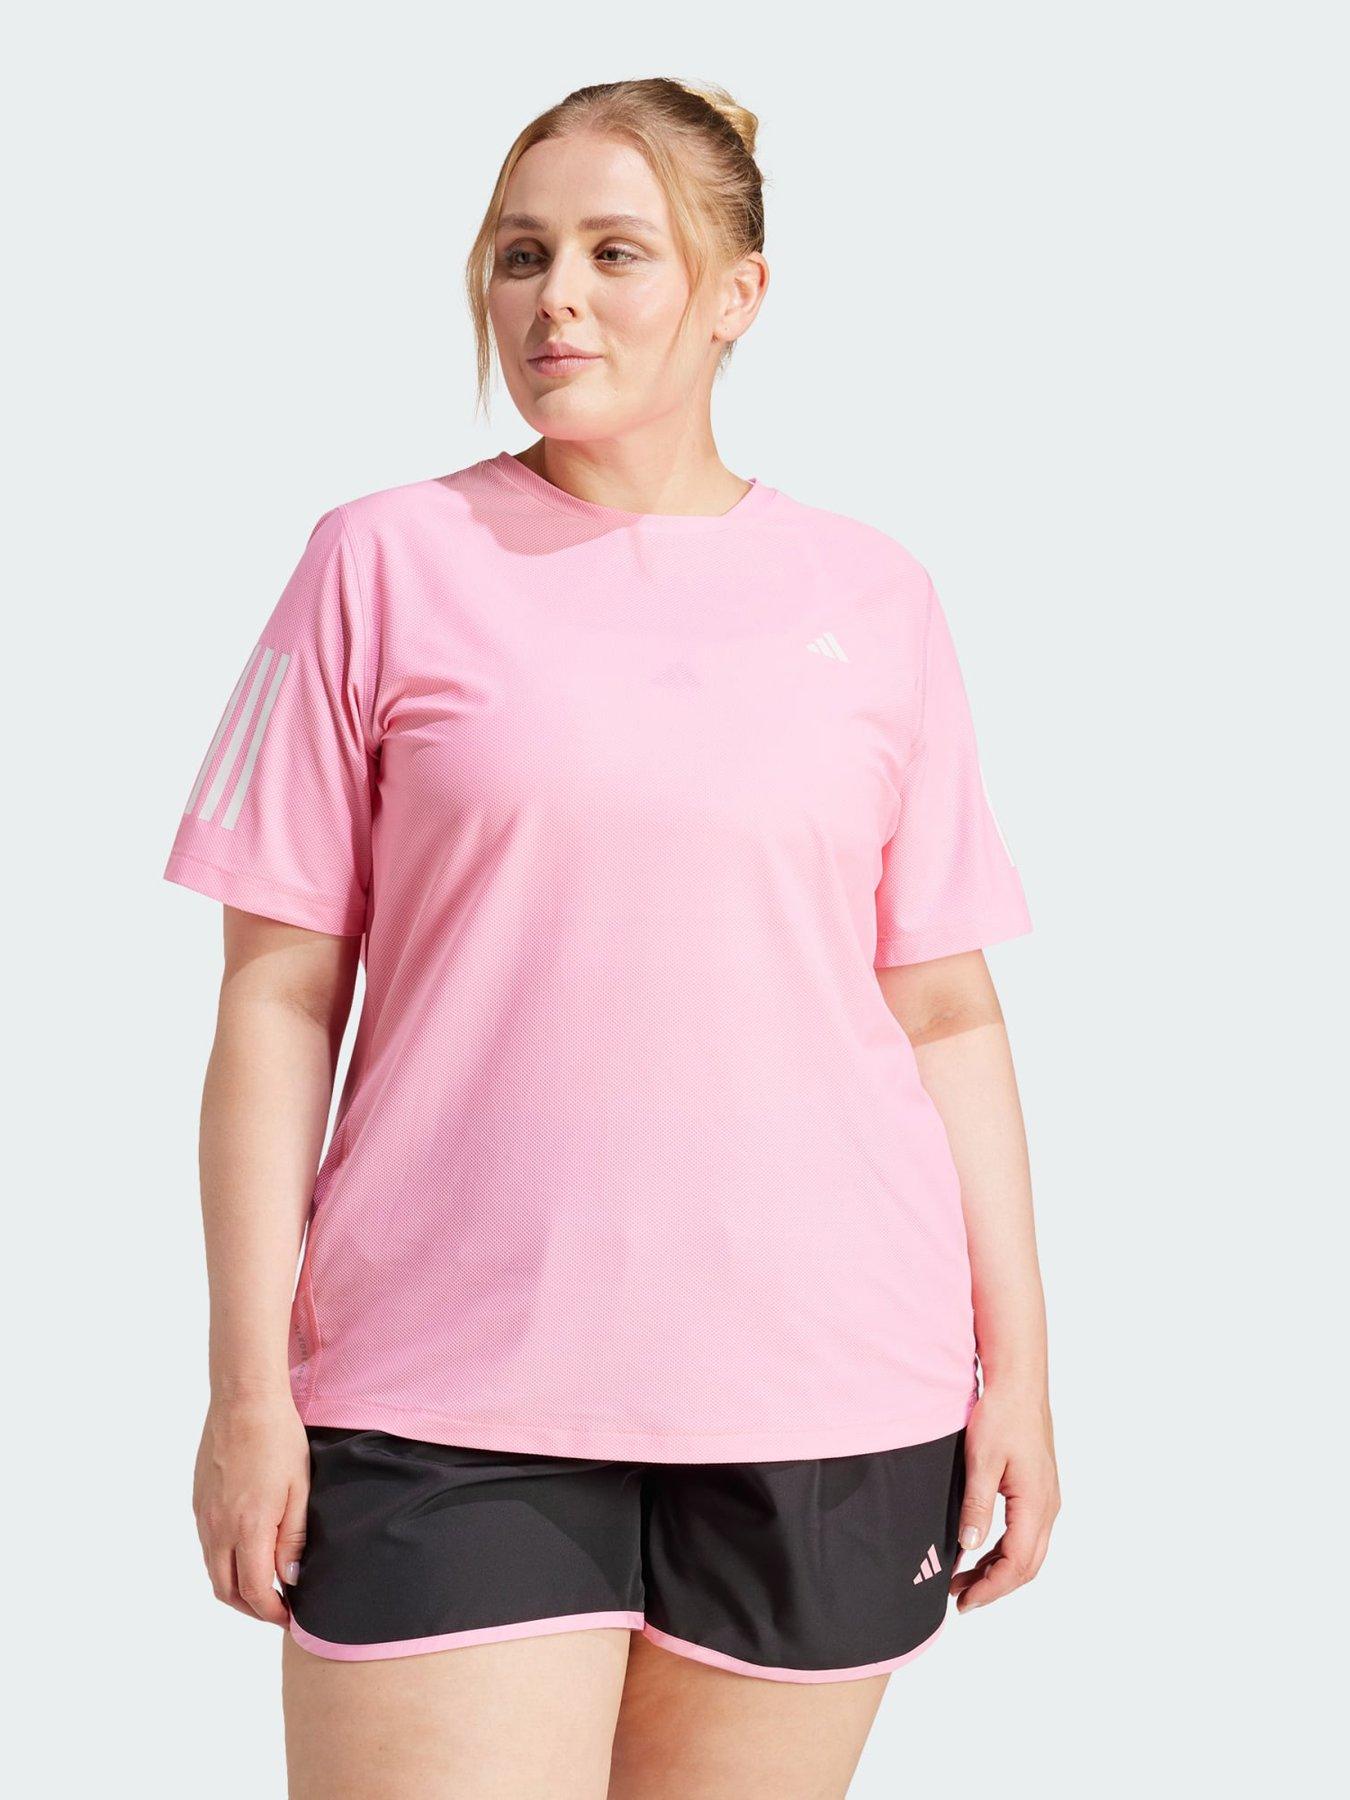 adidas Own The Run Tee (Plus Size), Pink, Size 1X, Women